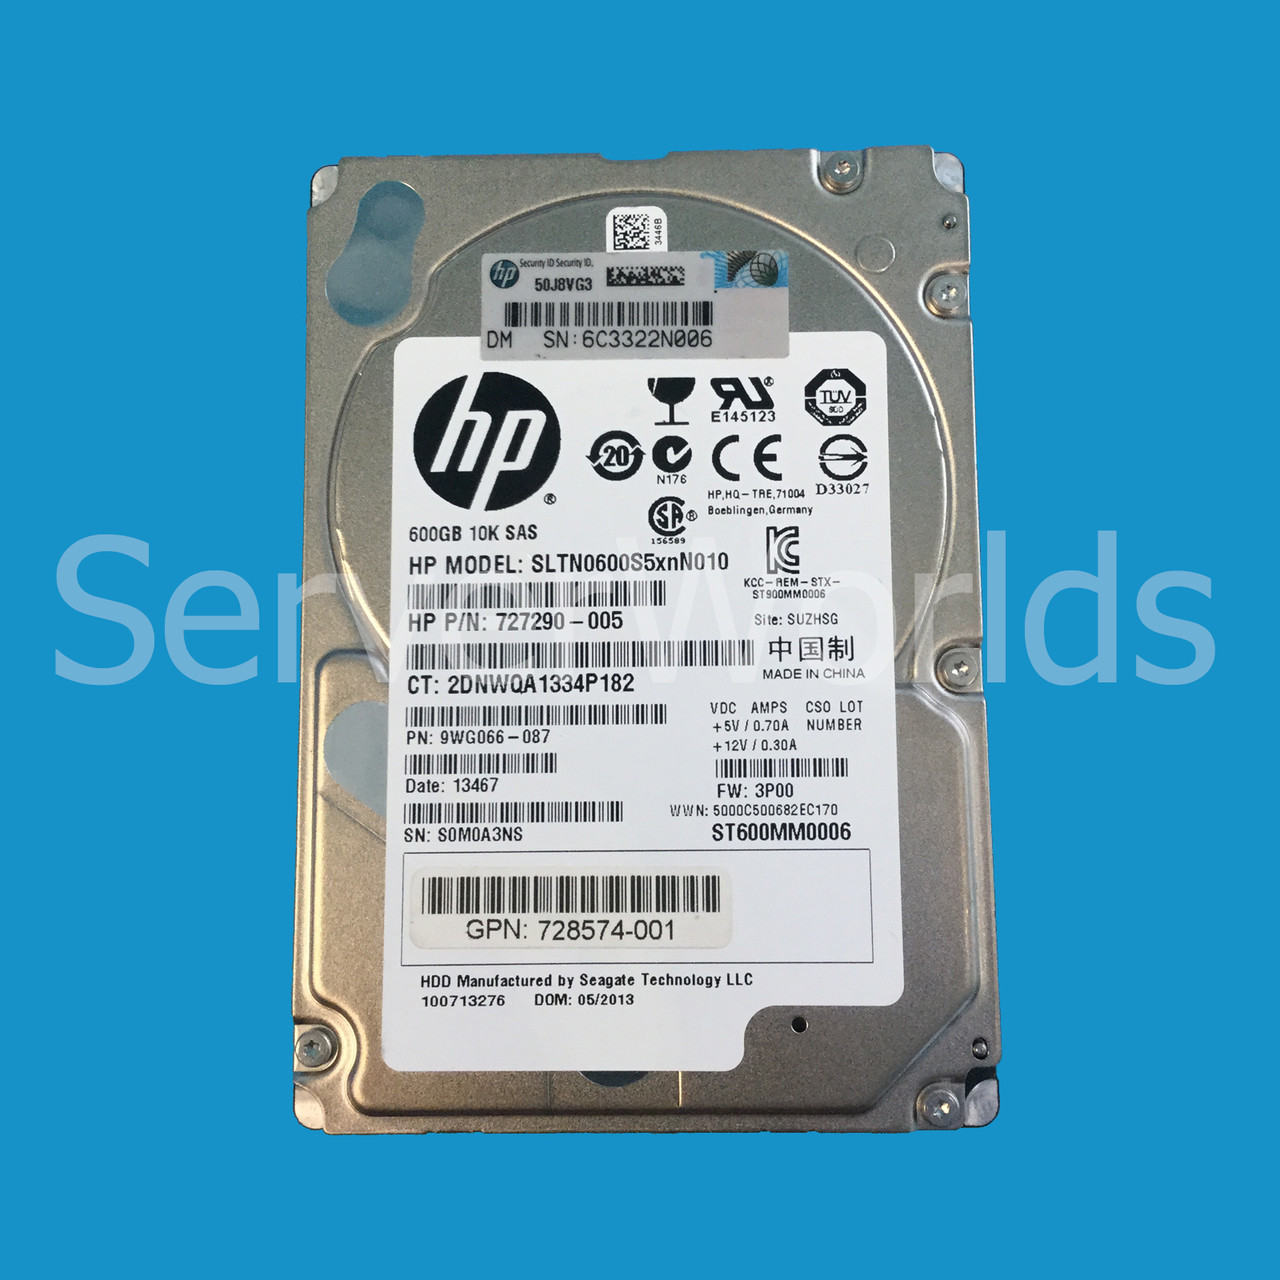 HP 727290-005 600GB 10k SFF 2.5 SAS 6G Drive only 728574-001